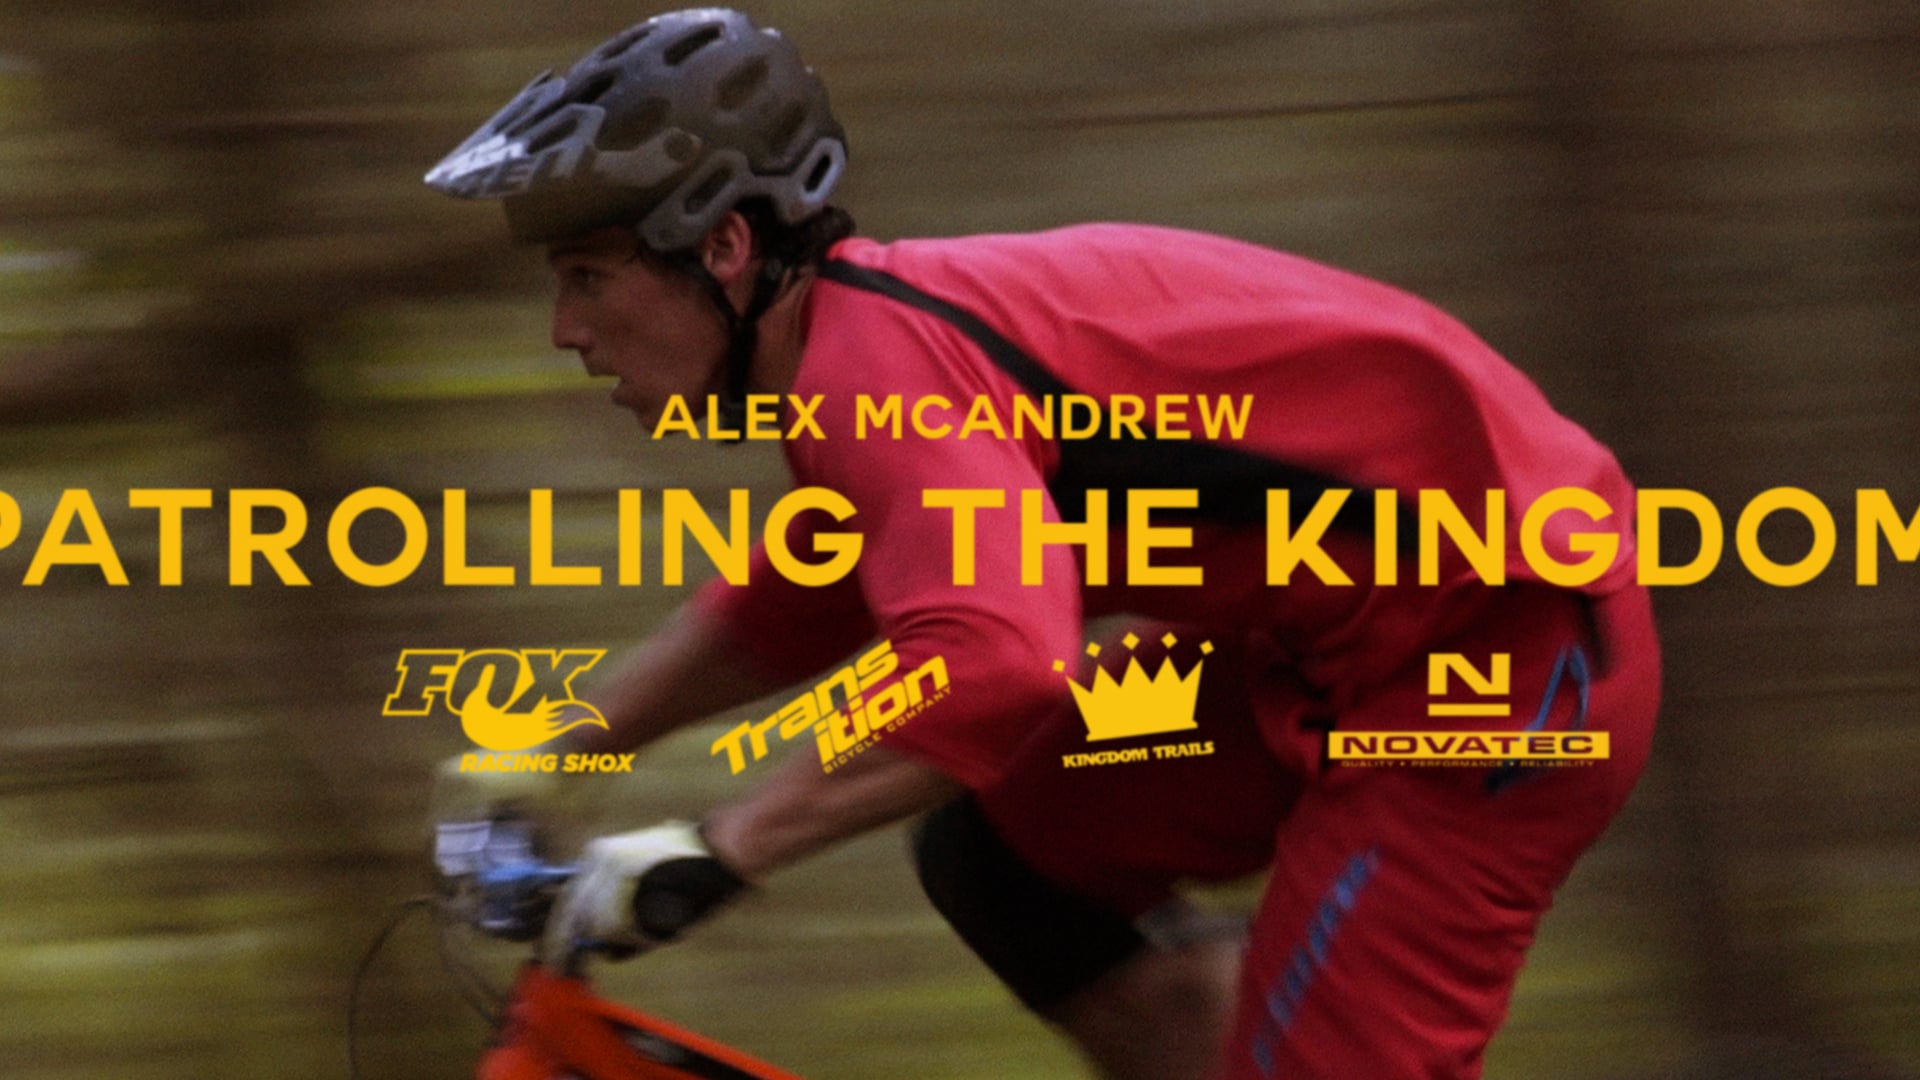 Alex McAndrew - Patrolling The Kingdom